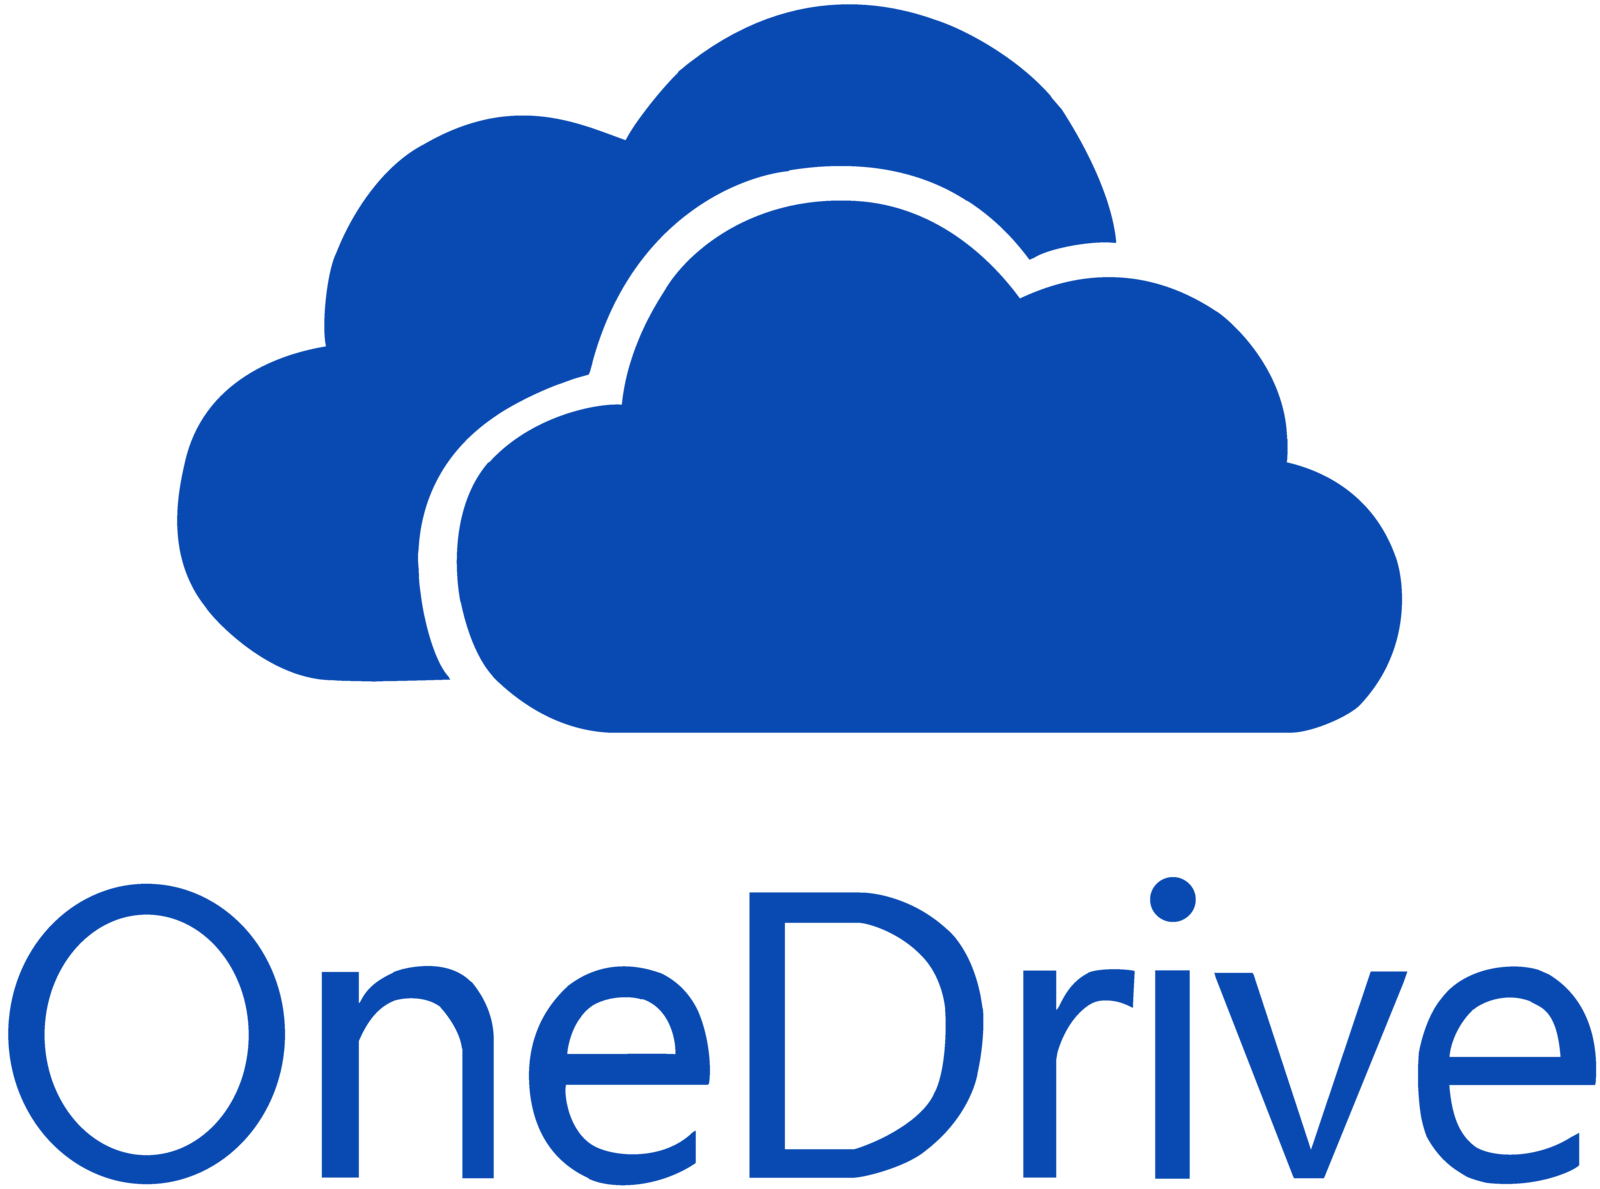 Microsoft One Drive Logo - Onedrive Logo Vector PNG Transparent Onedrive Logo Vector.PNG Images ...